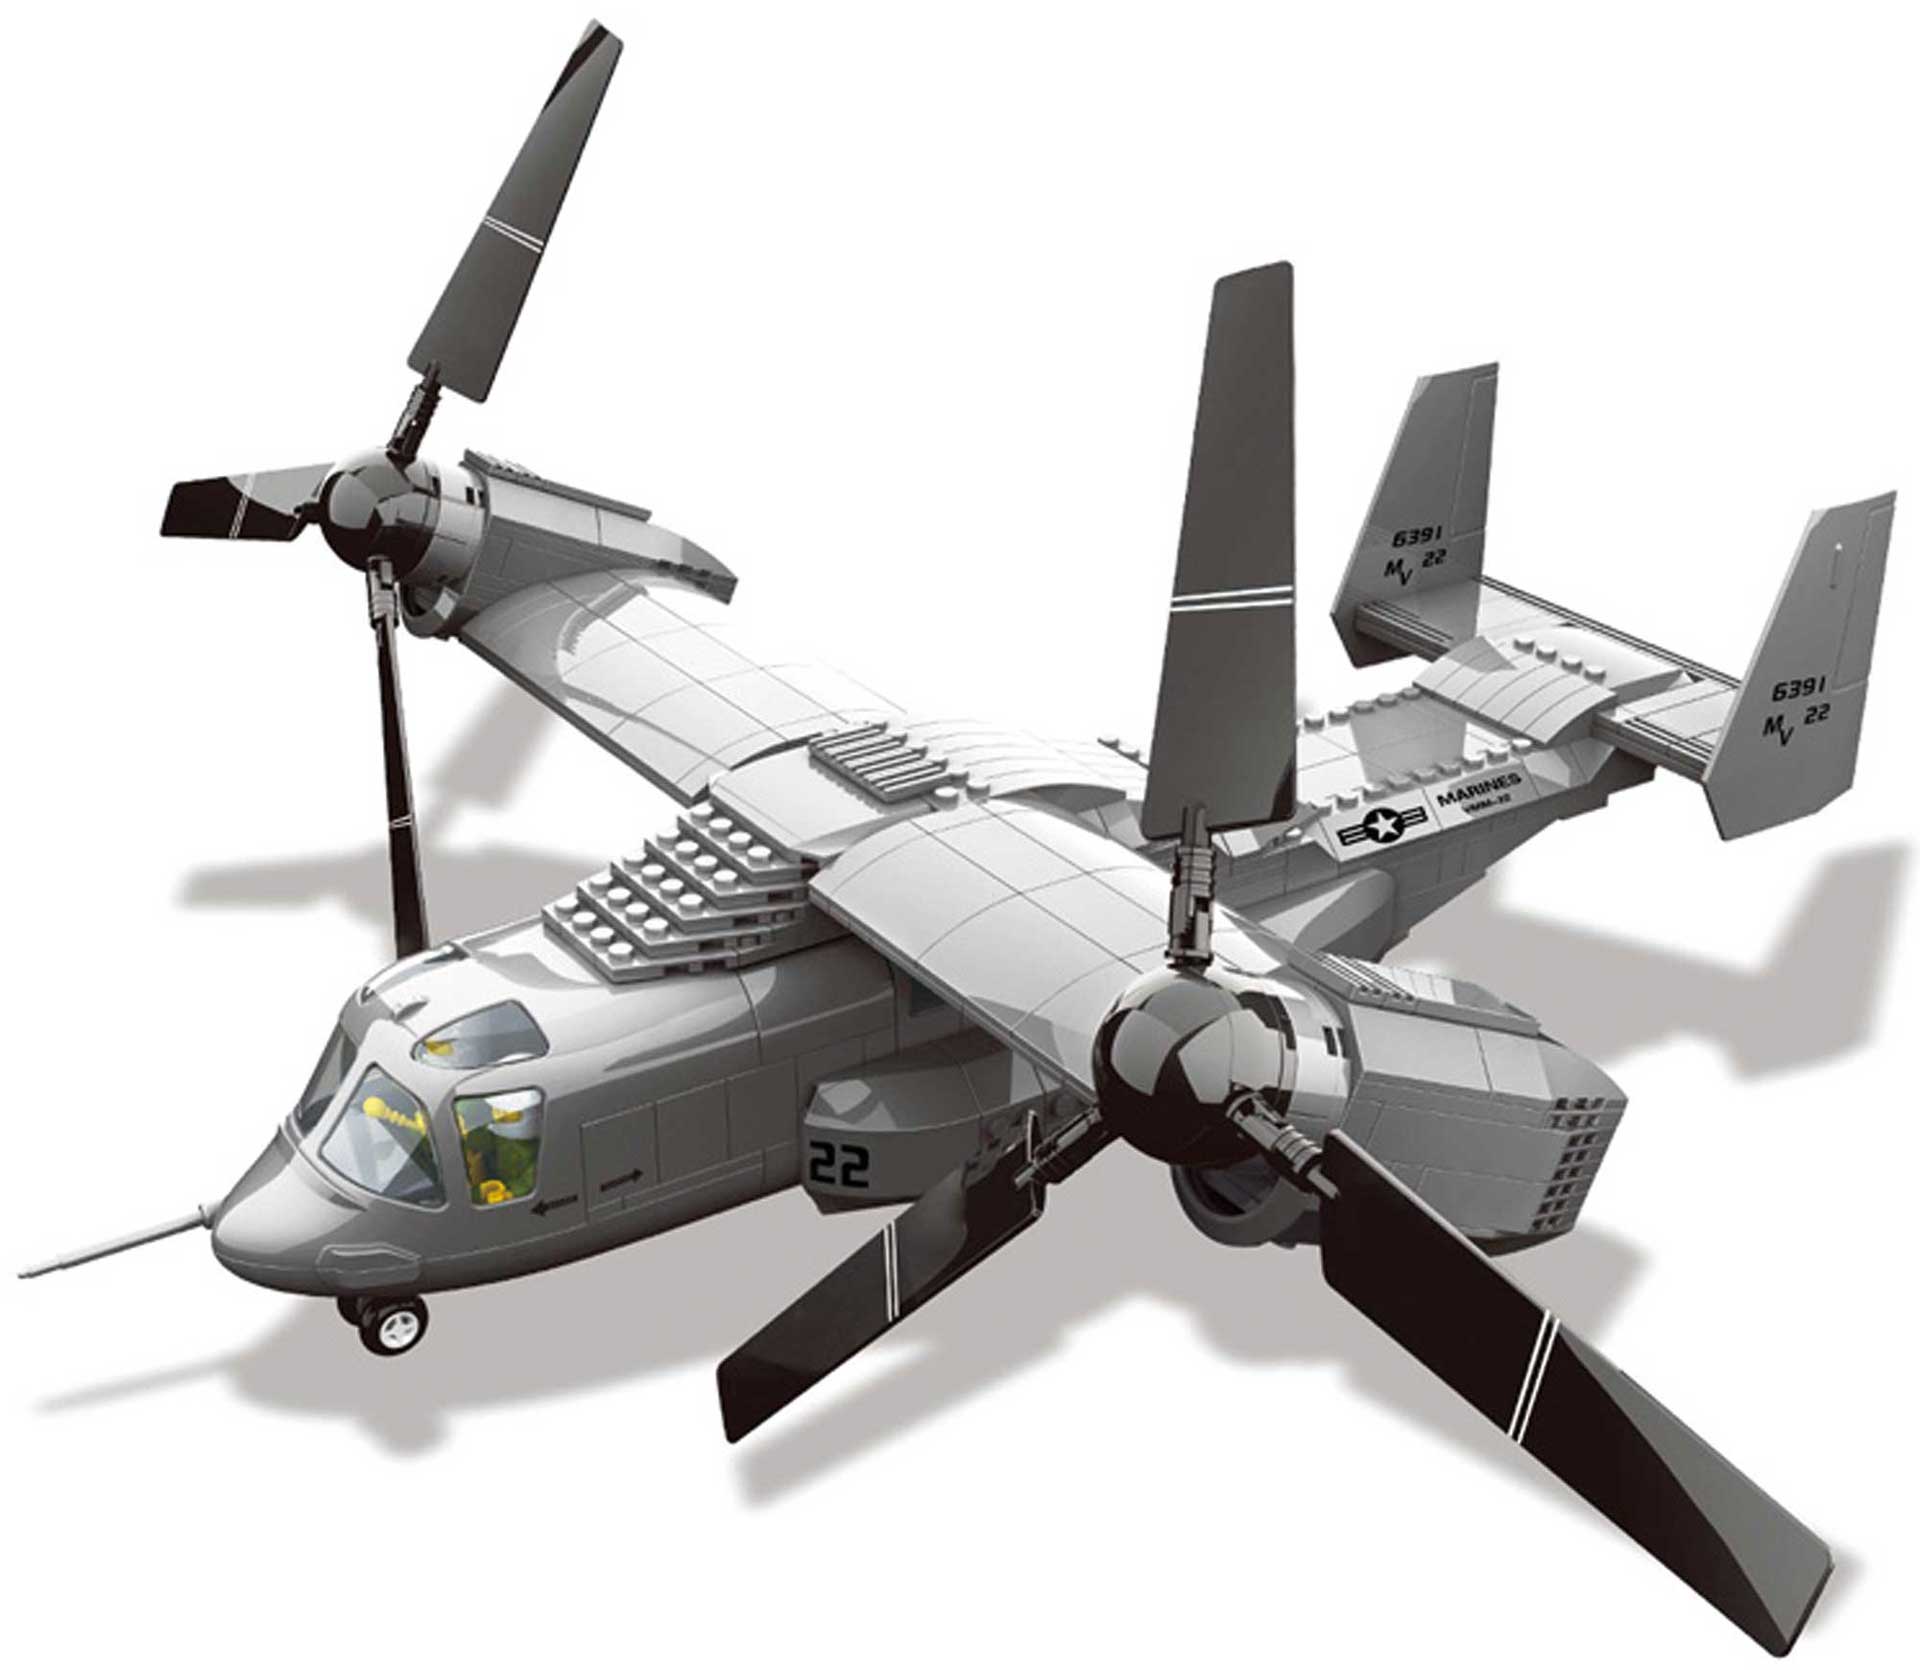 Wange V-22 Osprey tiltrotor-aircraft 625 pieces